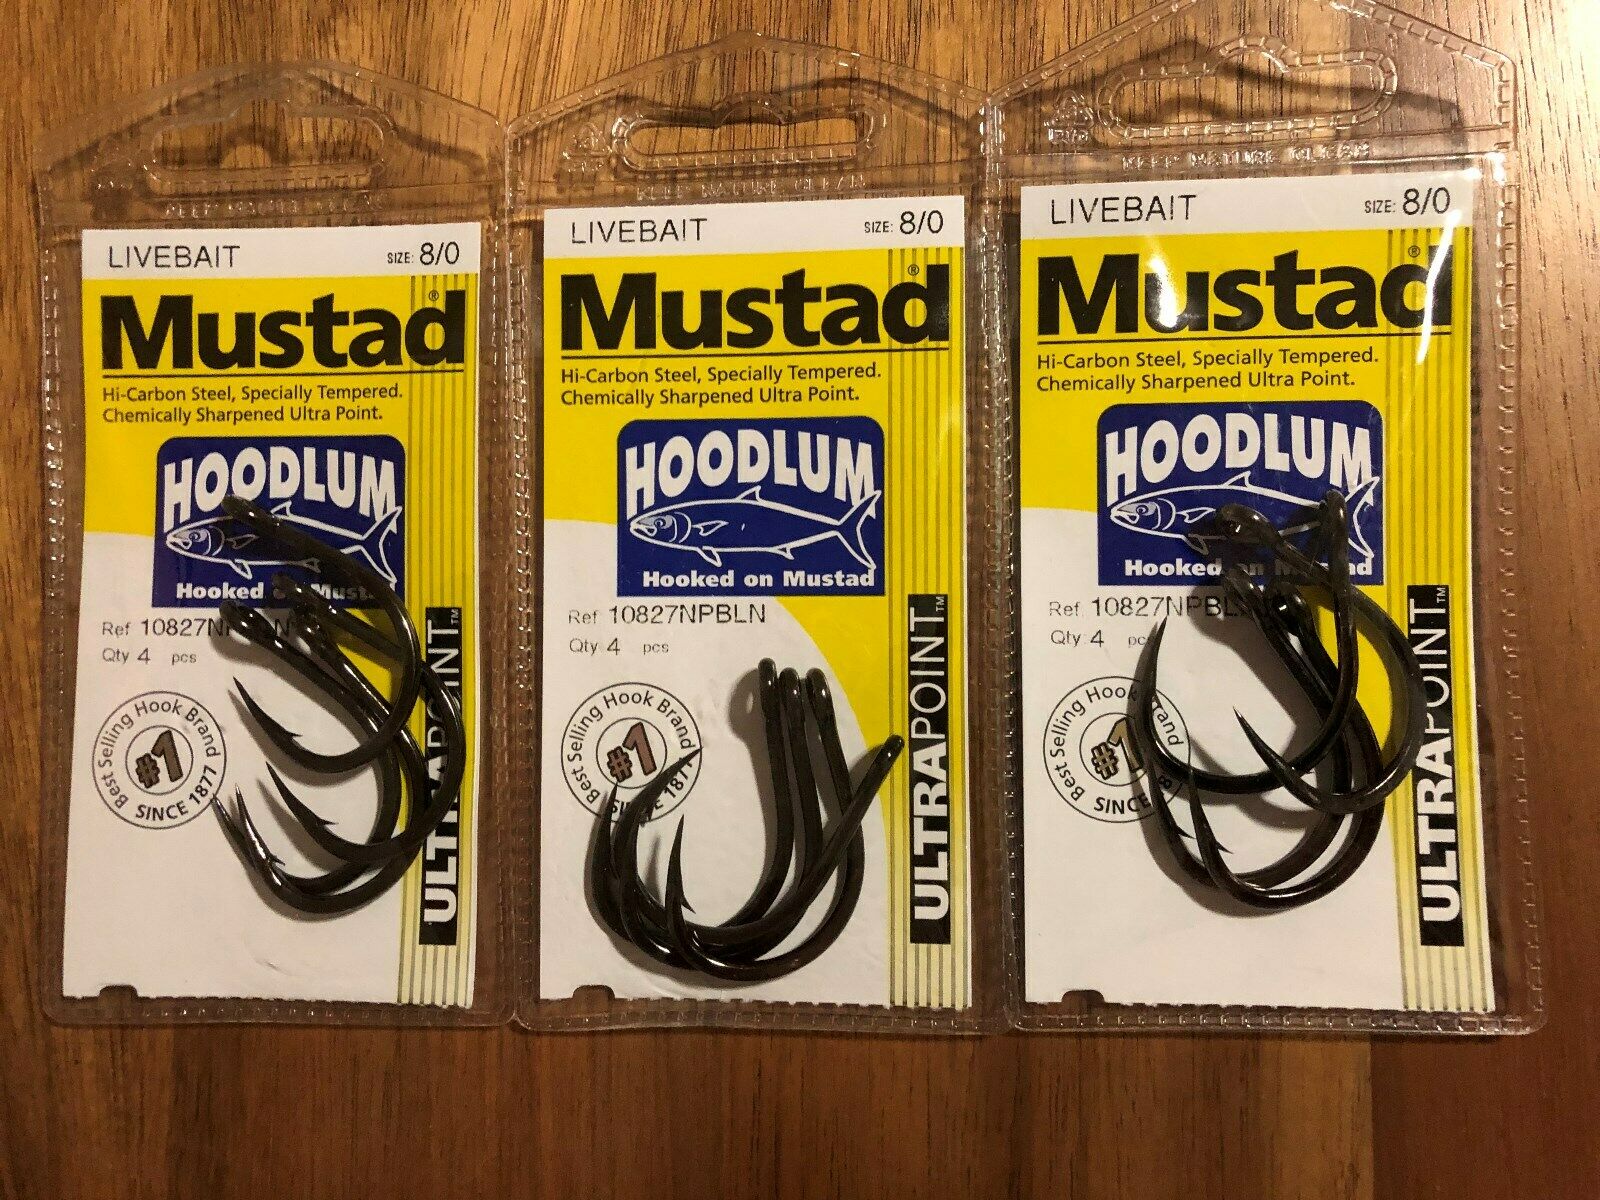 Mustad Hoodlum 4X Live Bait Hook